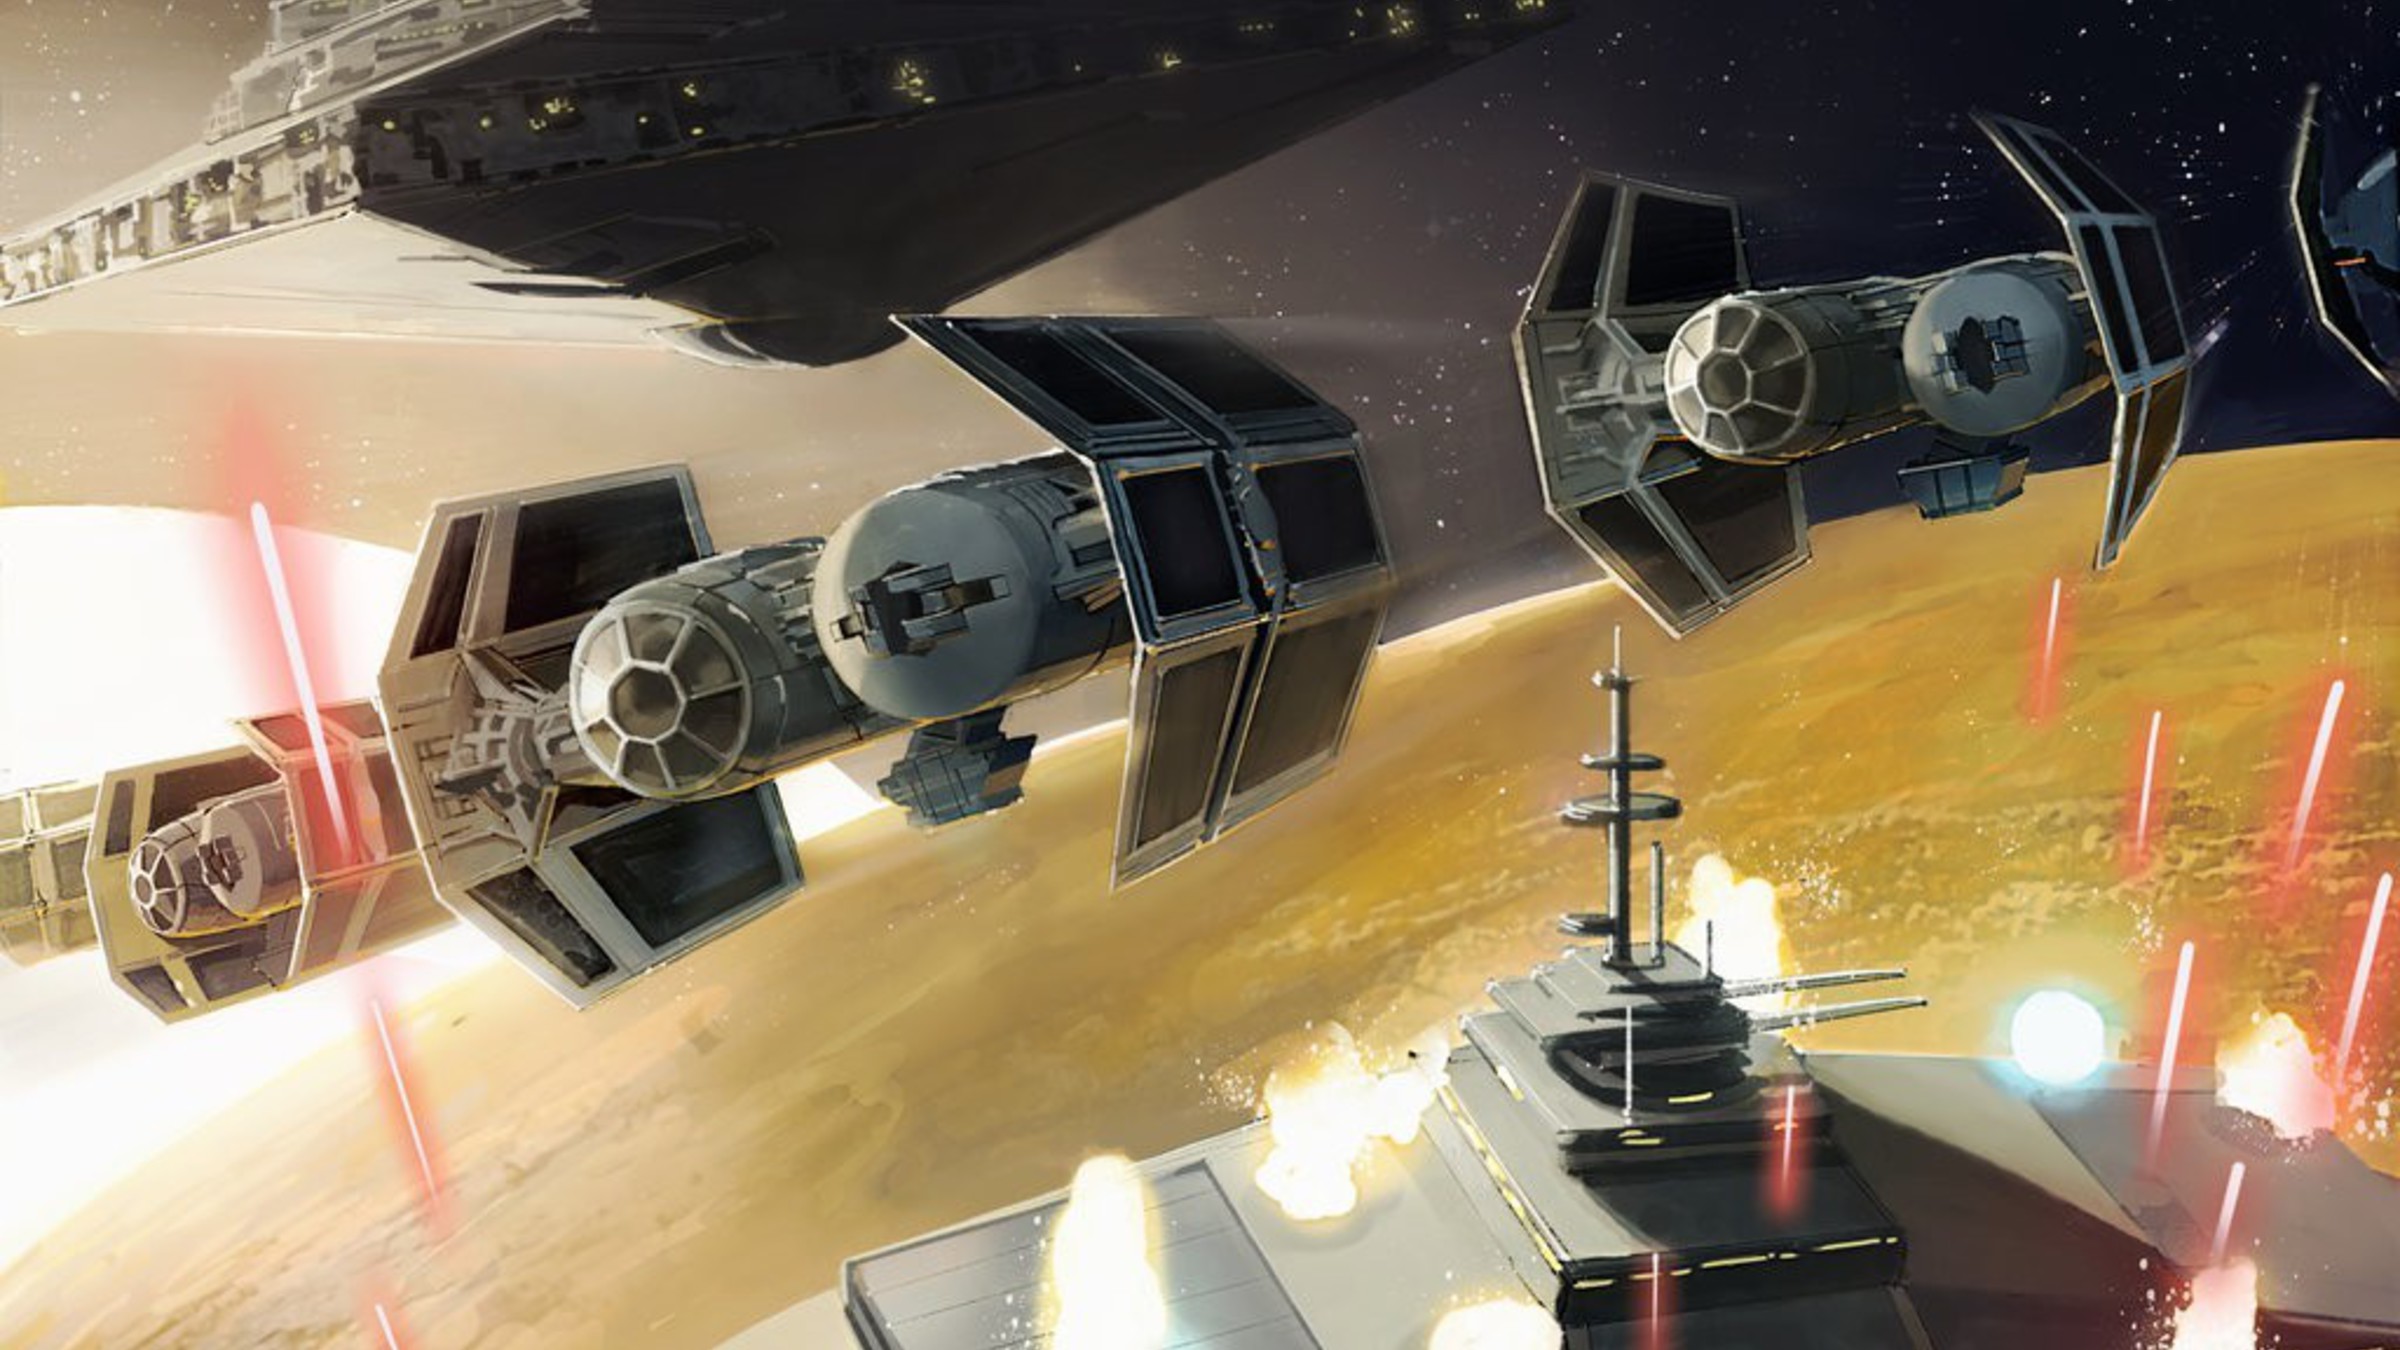 Star wars destroyers tie bomber artwork futuristic wallpaper ...